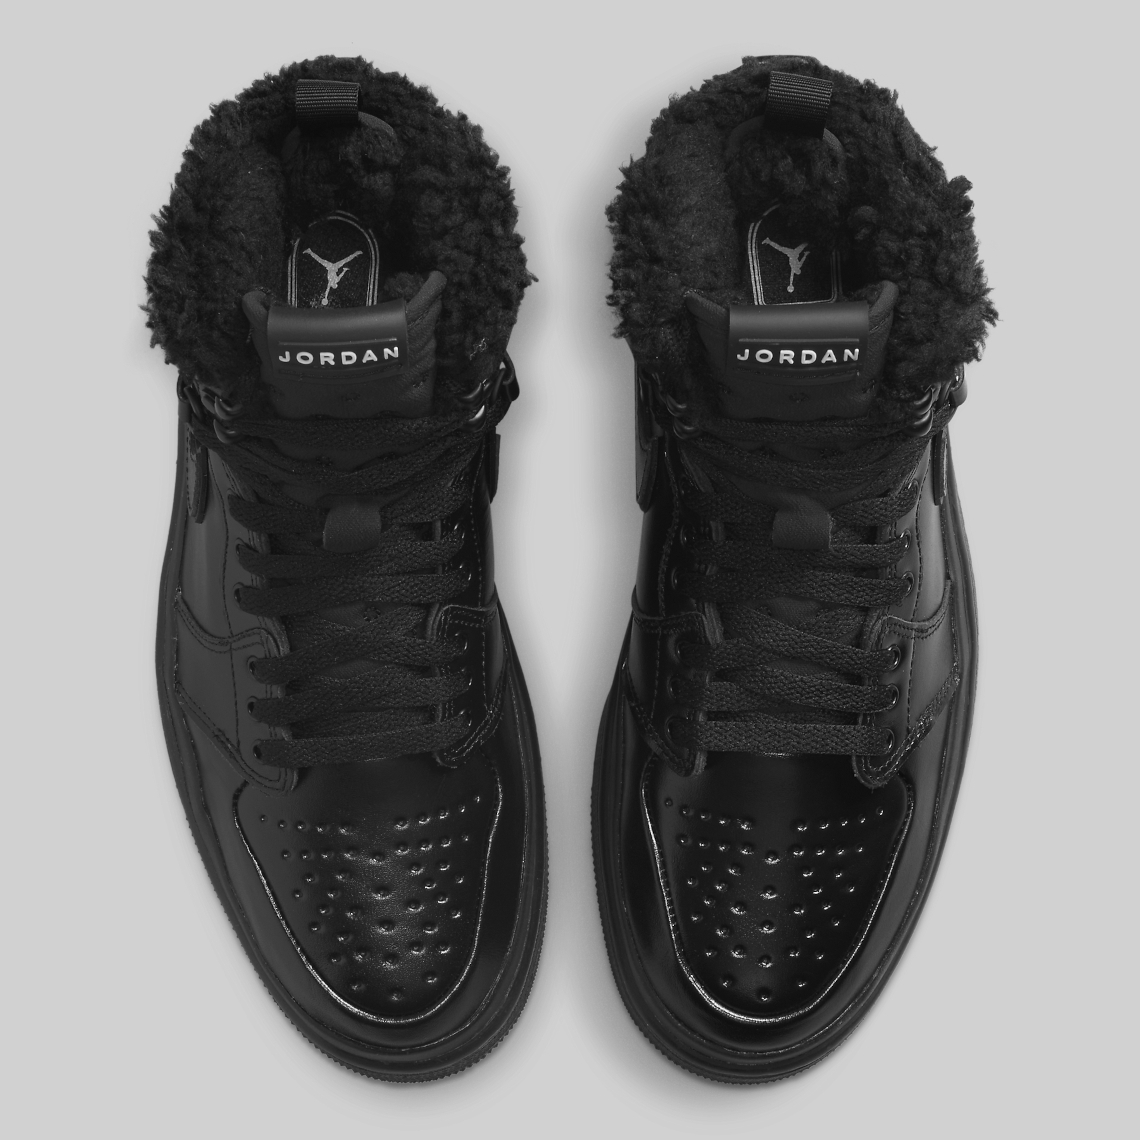 Air Jordan 1 Acclimate “Black”